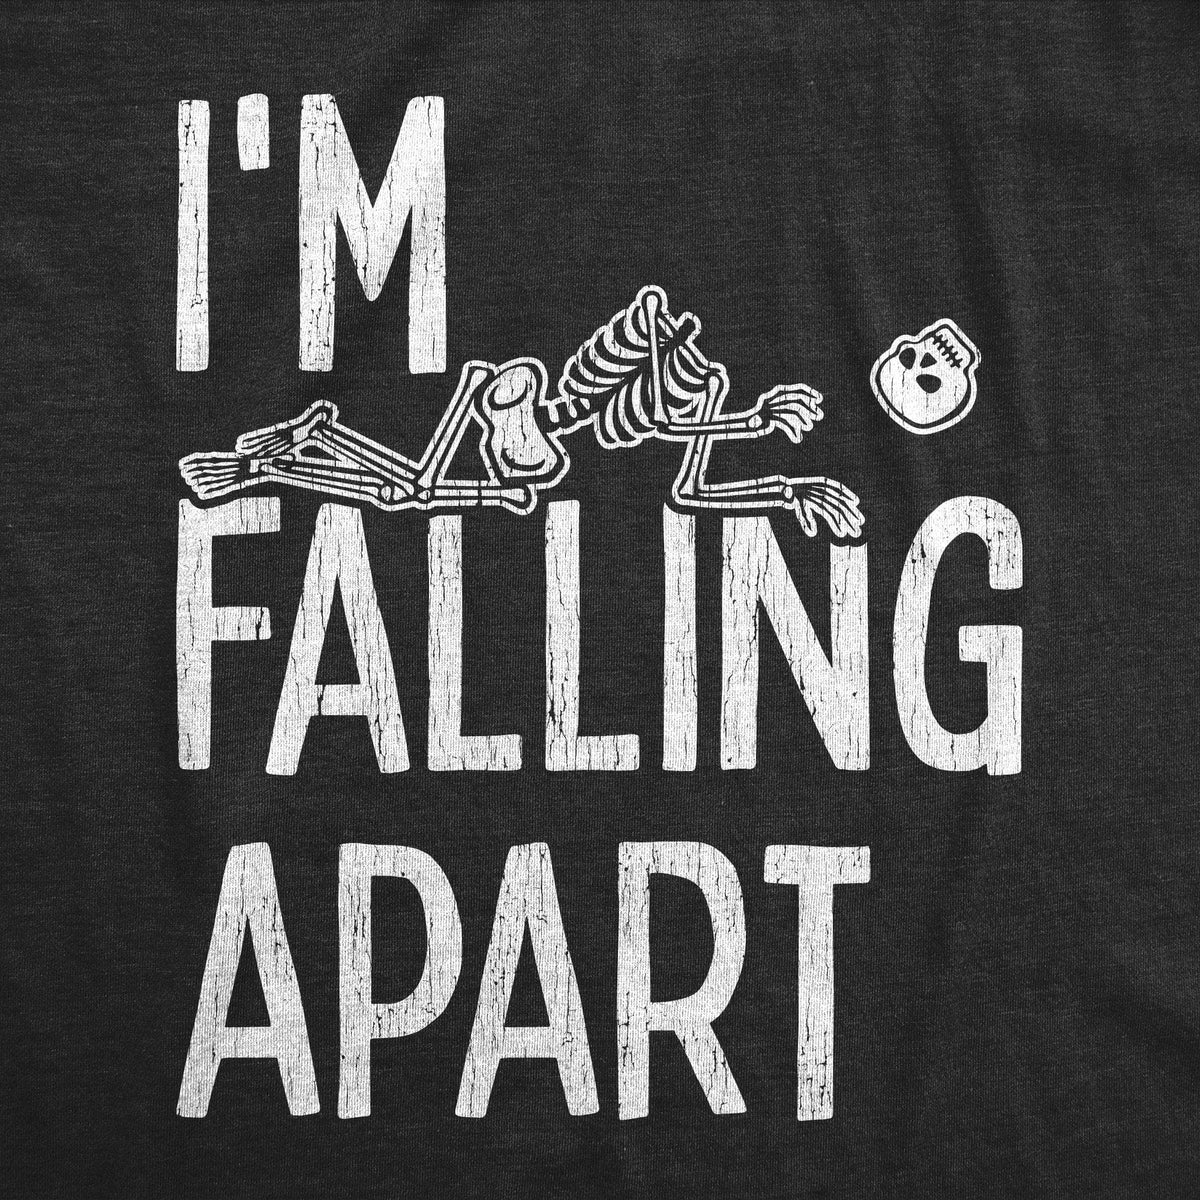 I&#39;m Falling Apart Men&#39;s Tshirt - Crazy Dog T-Shirts